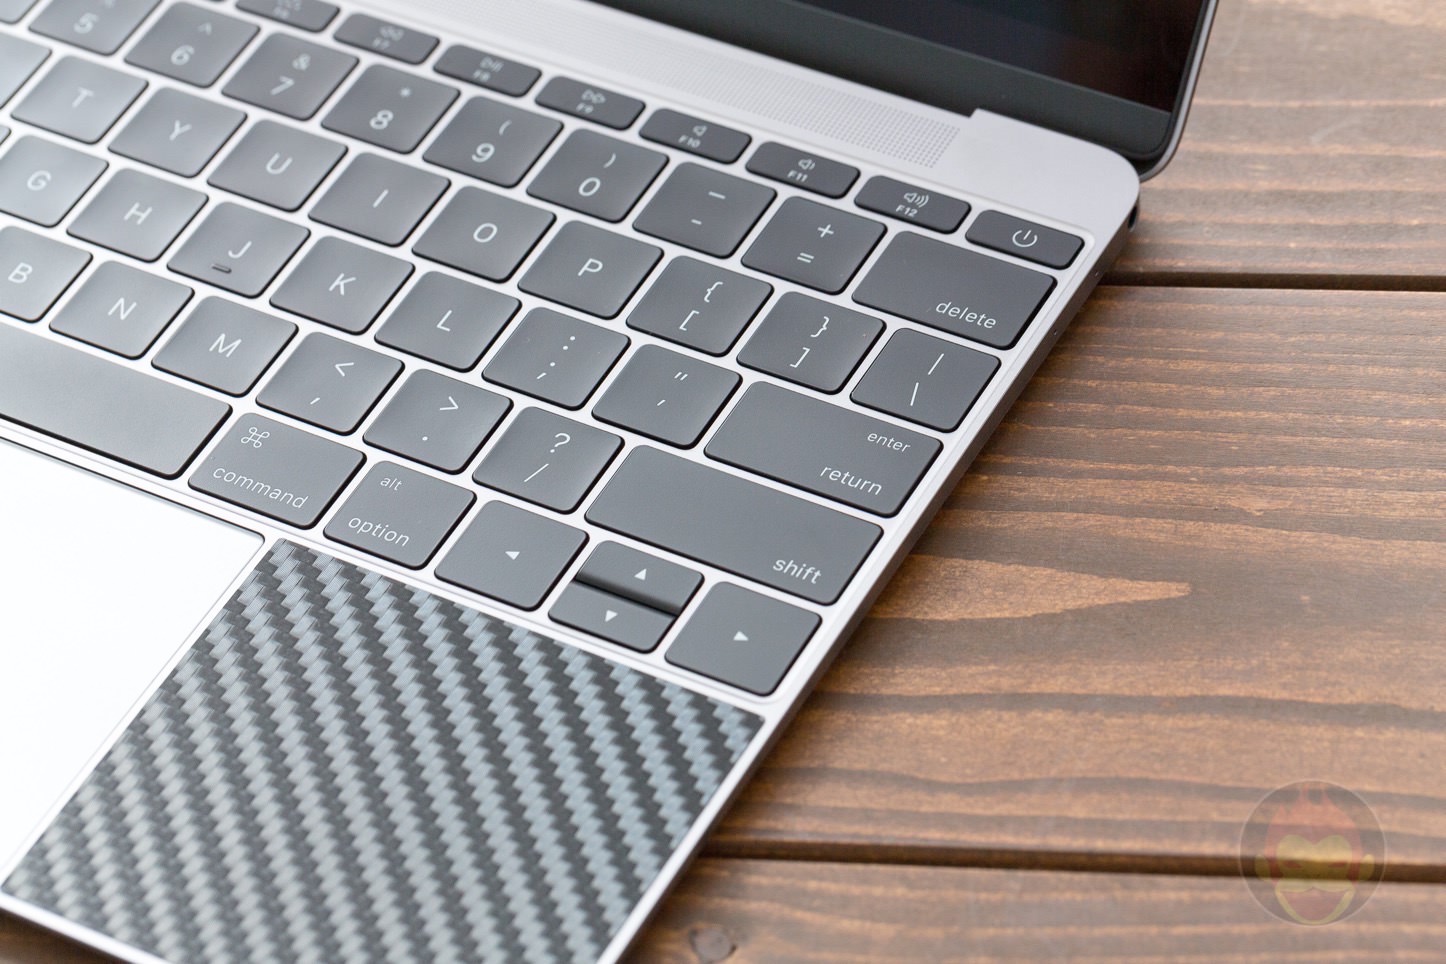 2016-MacBook-1.3GHz-Review-10.jpg